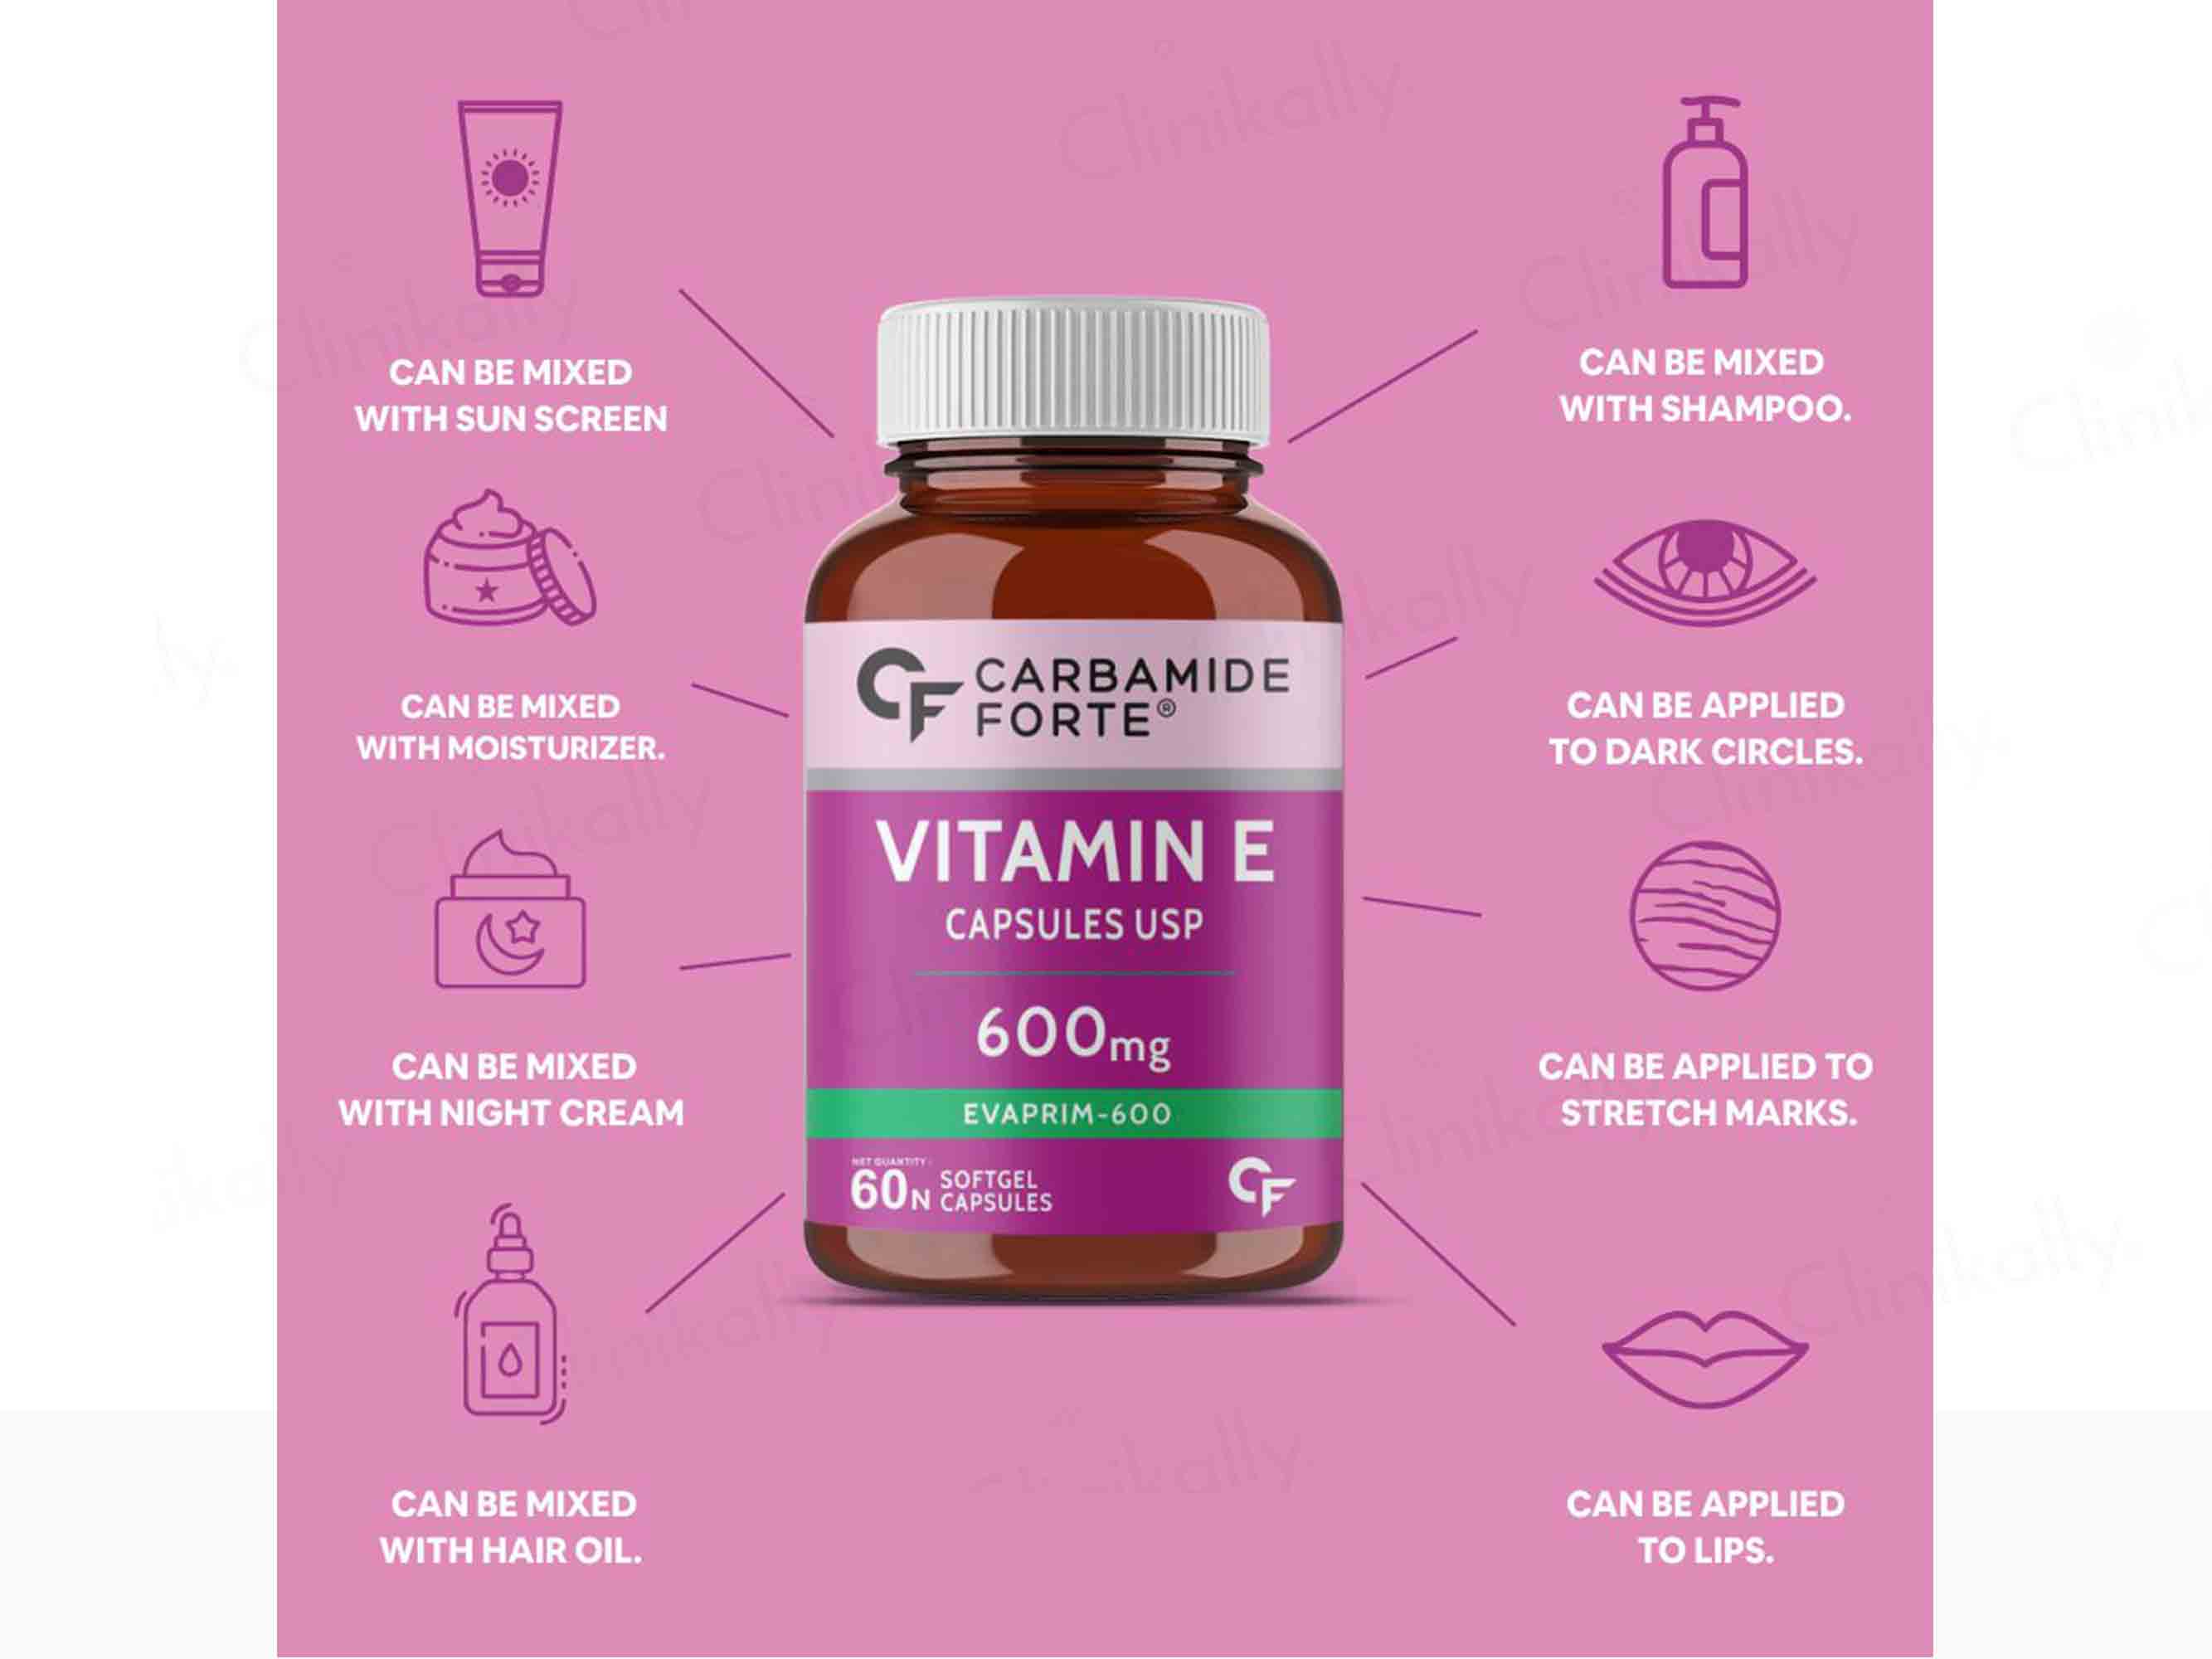 Carbamide Forte Vitamin E 600mg Capsule